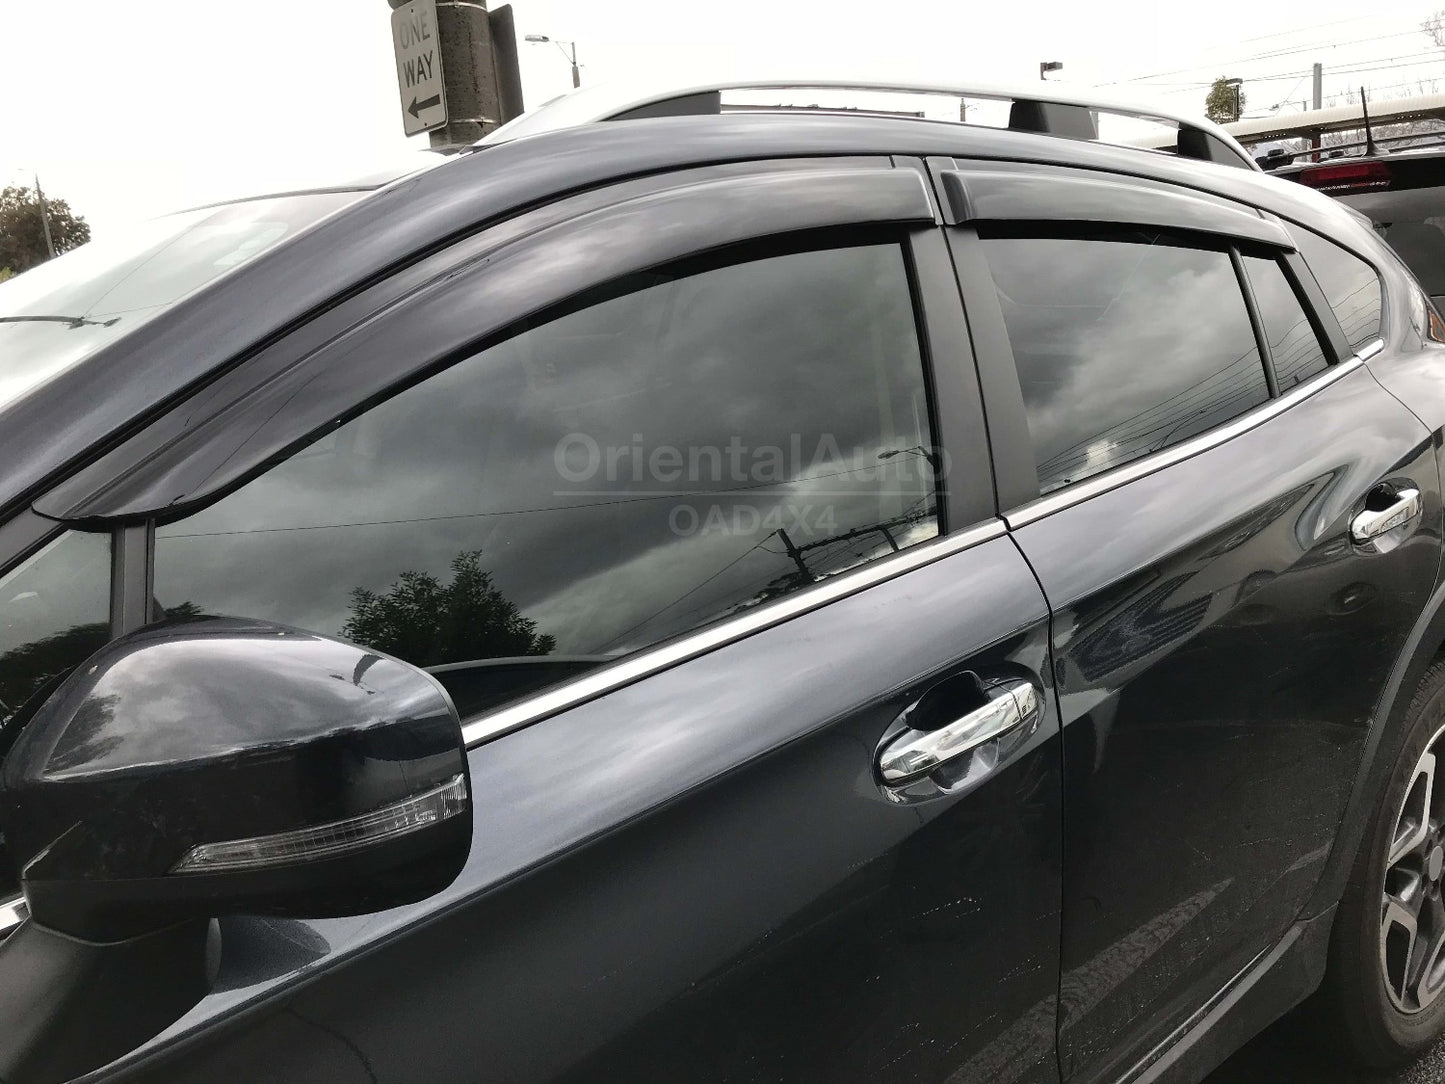 Luxury Weathershields For Subaru XV G5X 2017-Onwards Weather Shields Window Visor